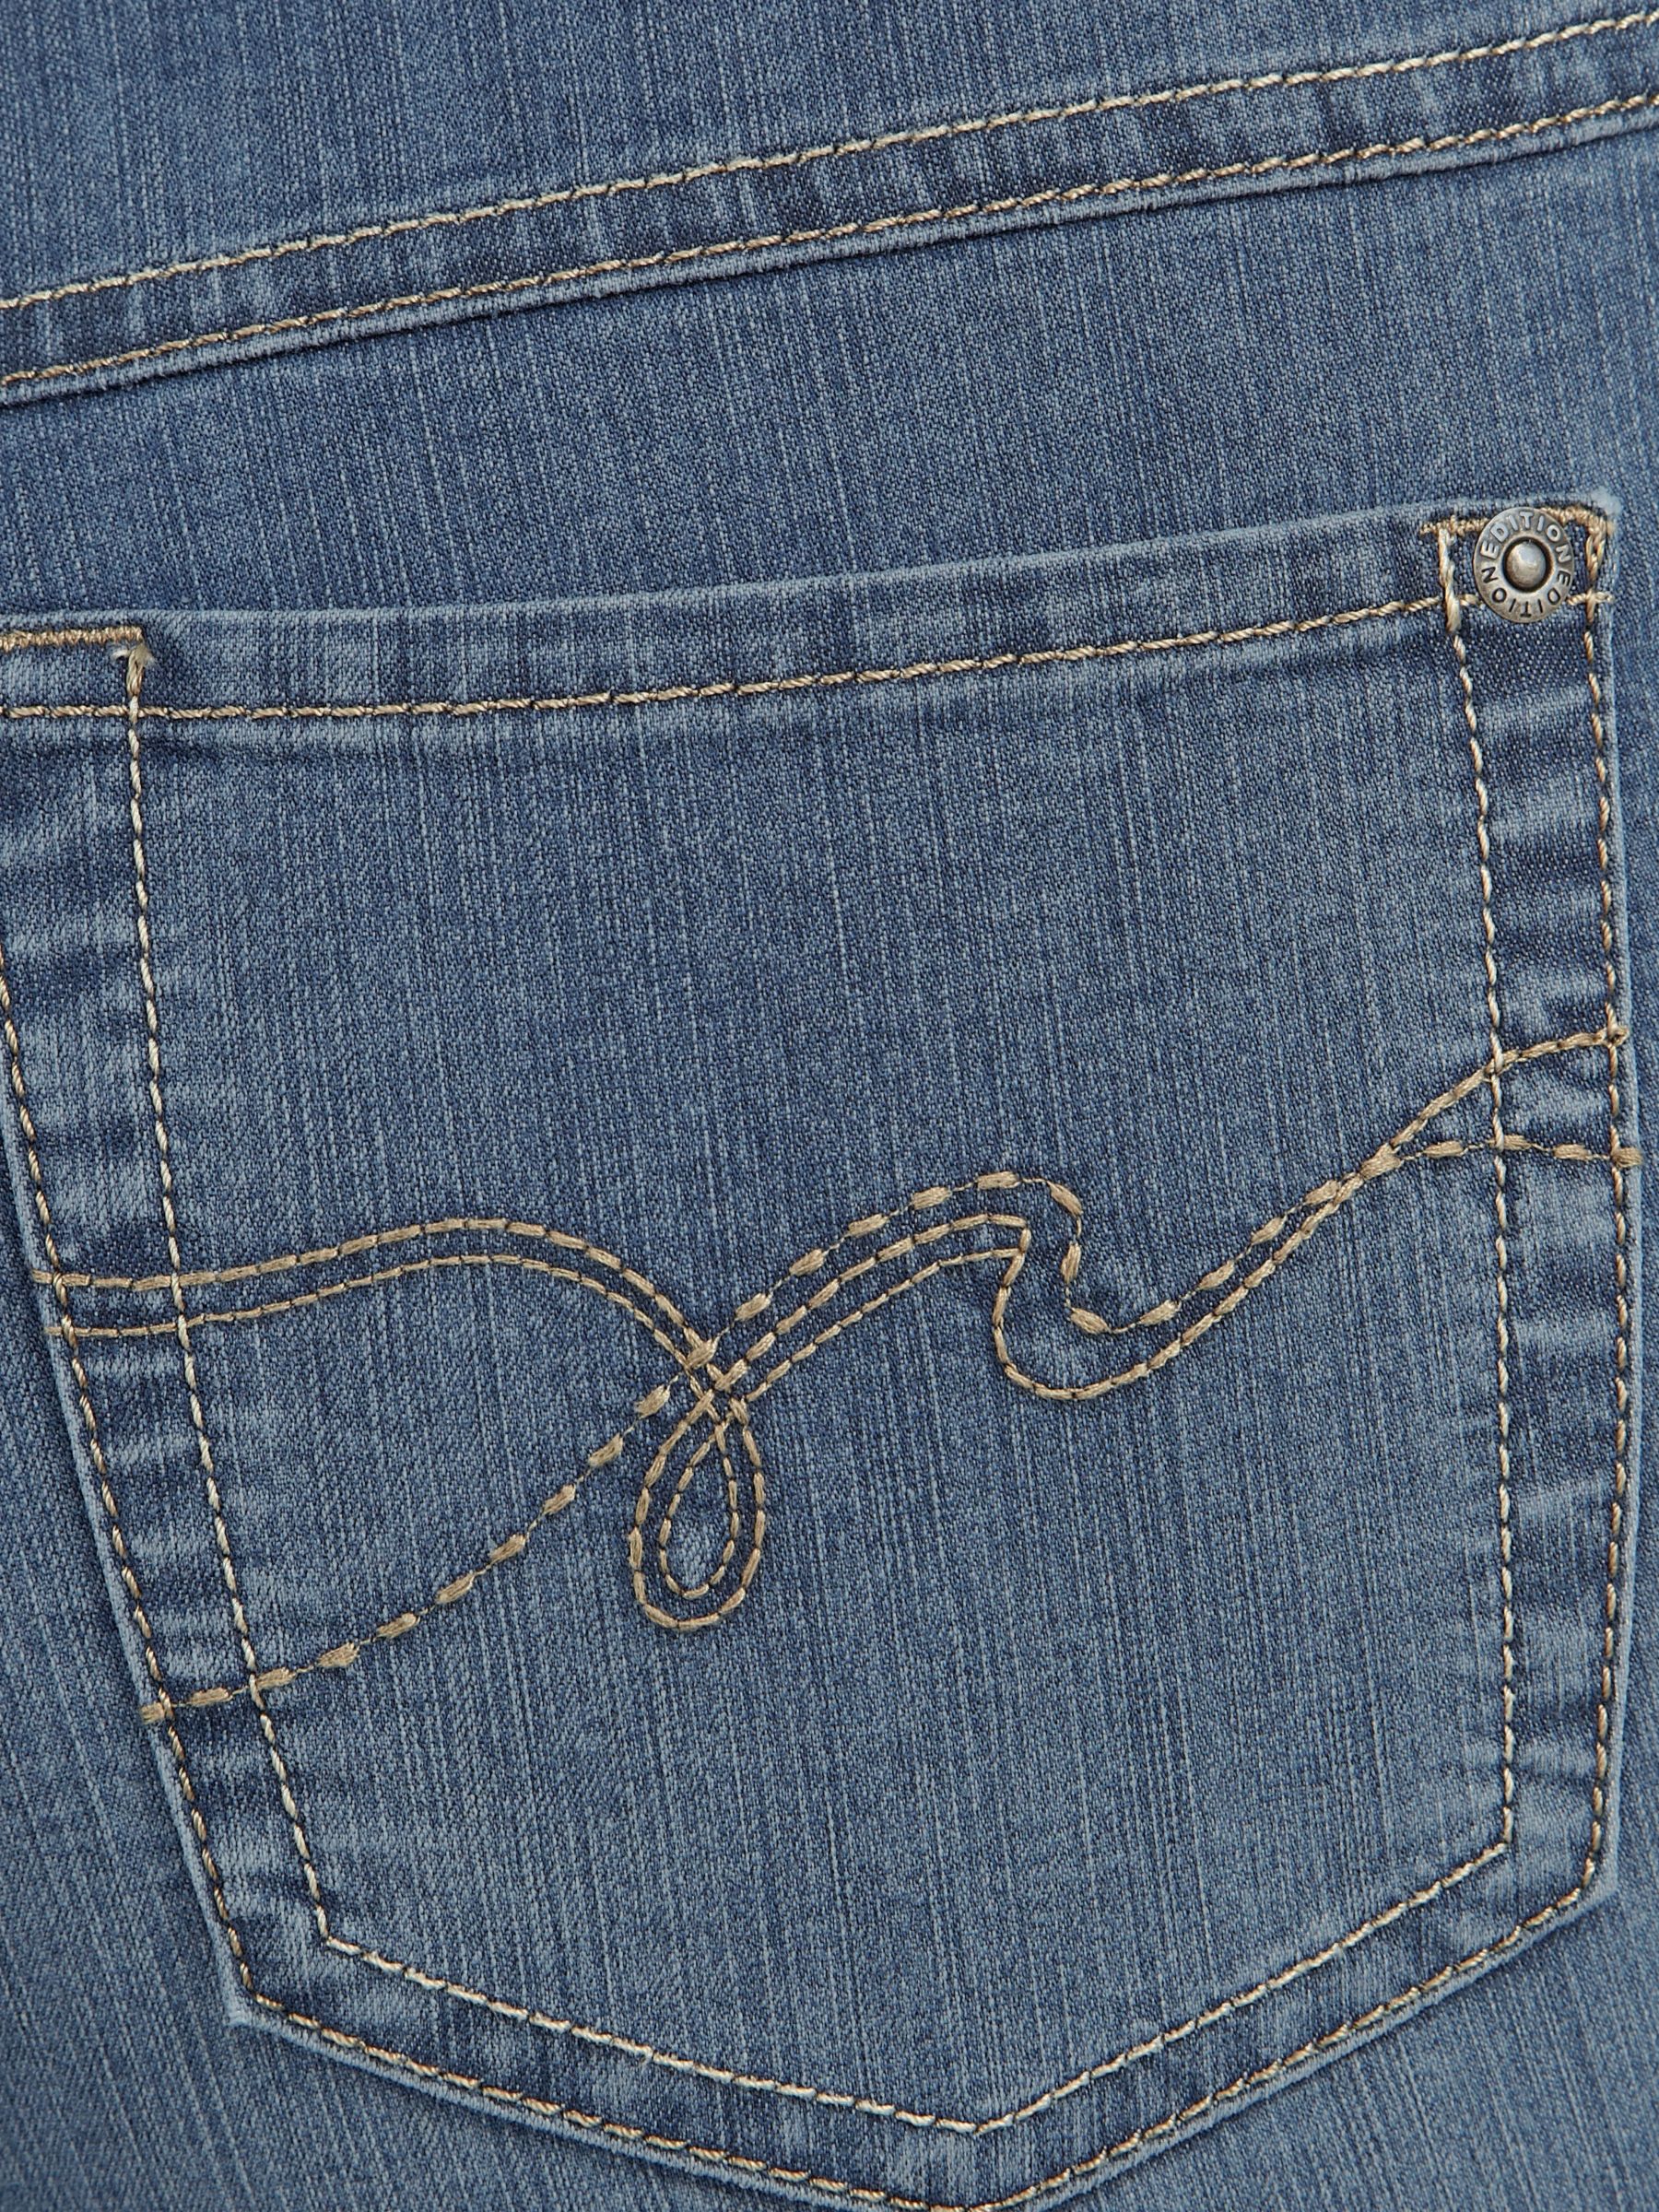 gerry weber edition romy jeans